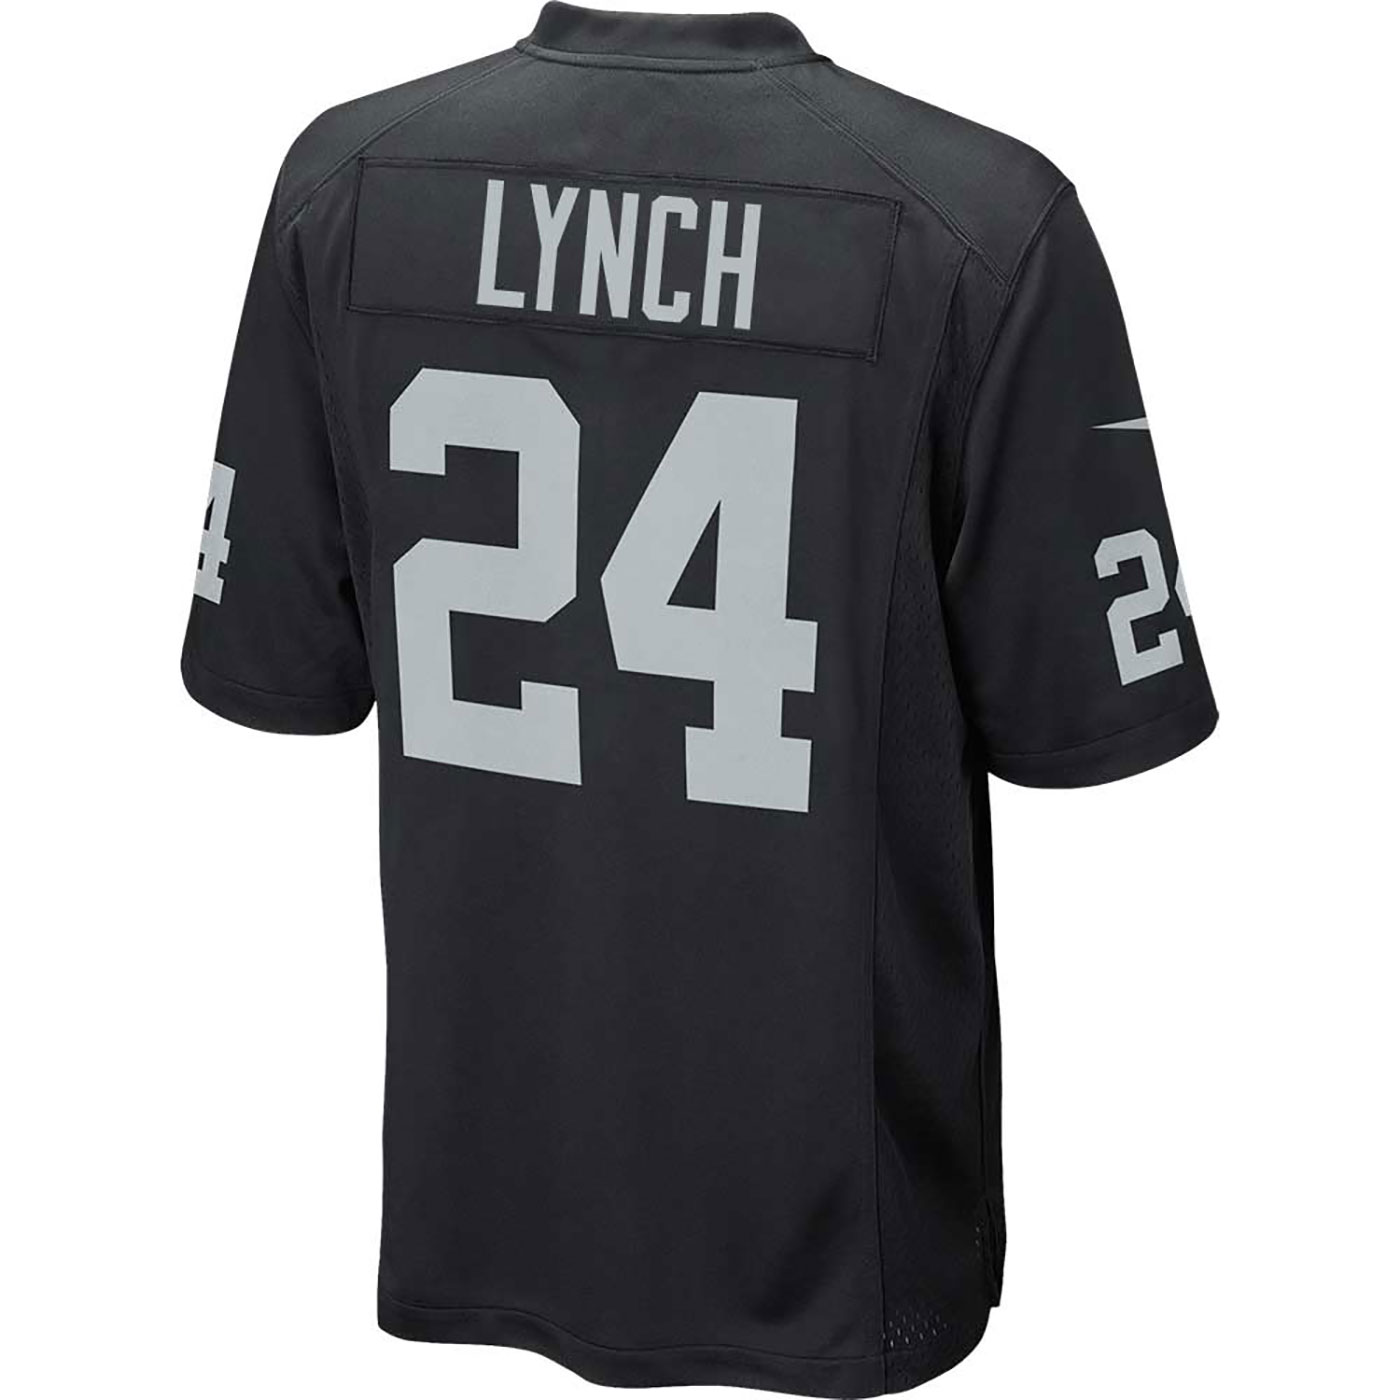 lynch youth jersey